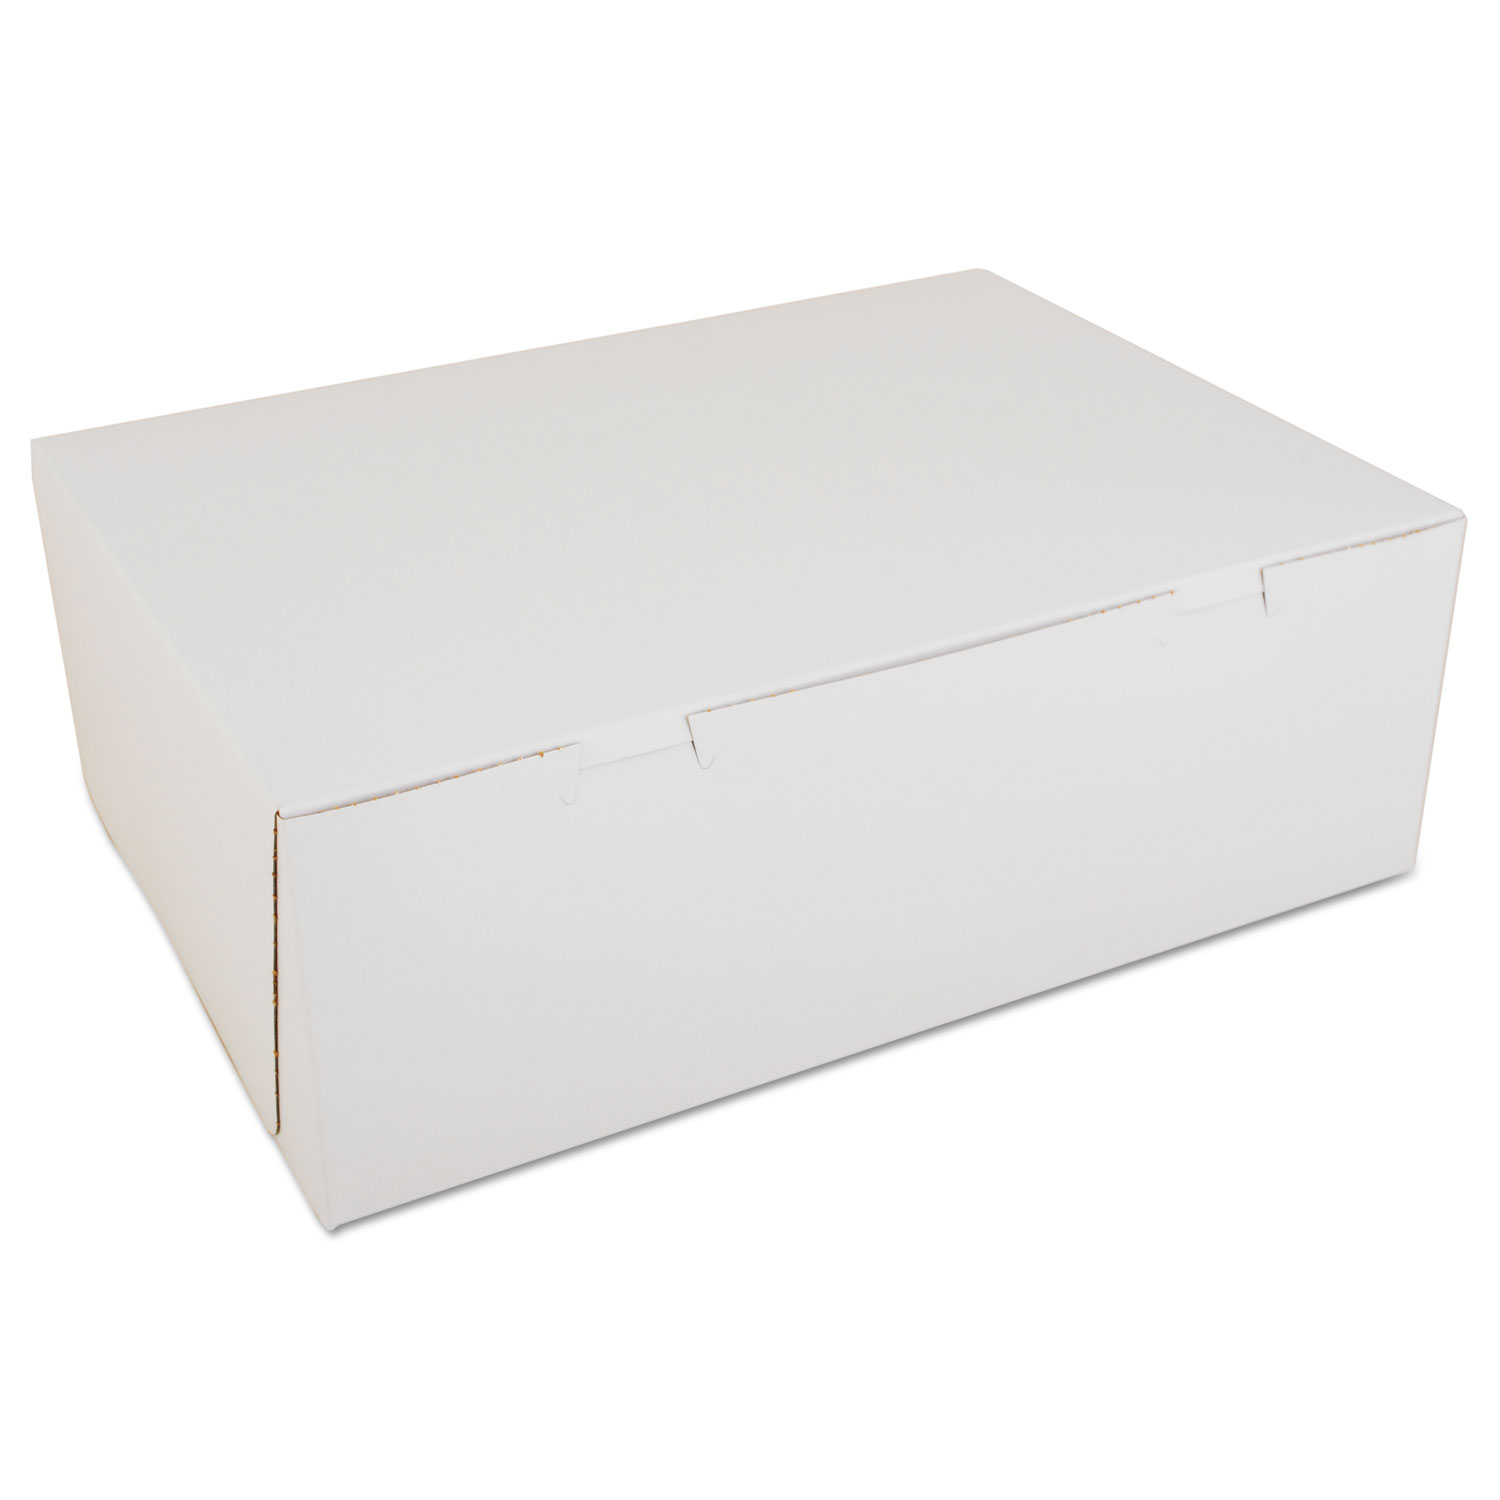  SCT SCH 1005 Non-Window Bakery Boxes, Paperboard, 14 1/2w x 10 1/2d x 5h, White, 100/Carton (SCH1005) 